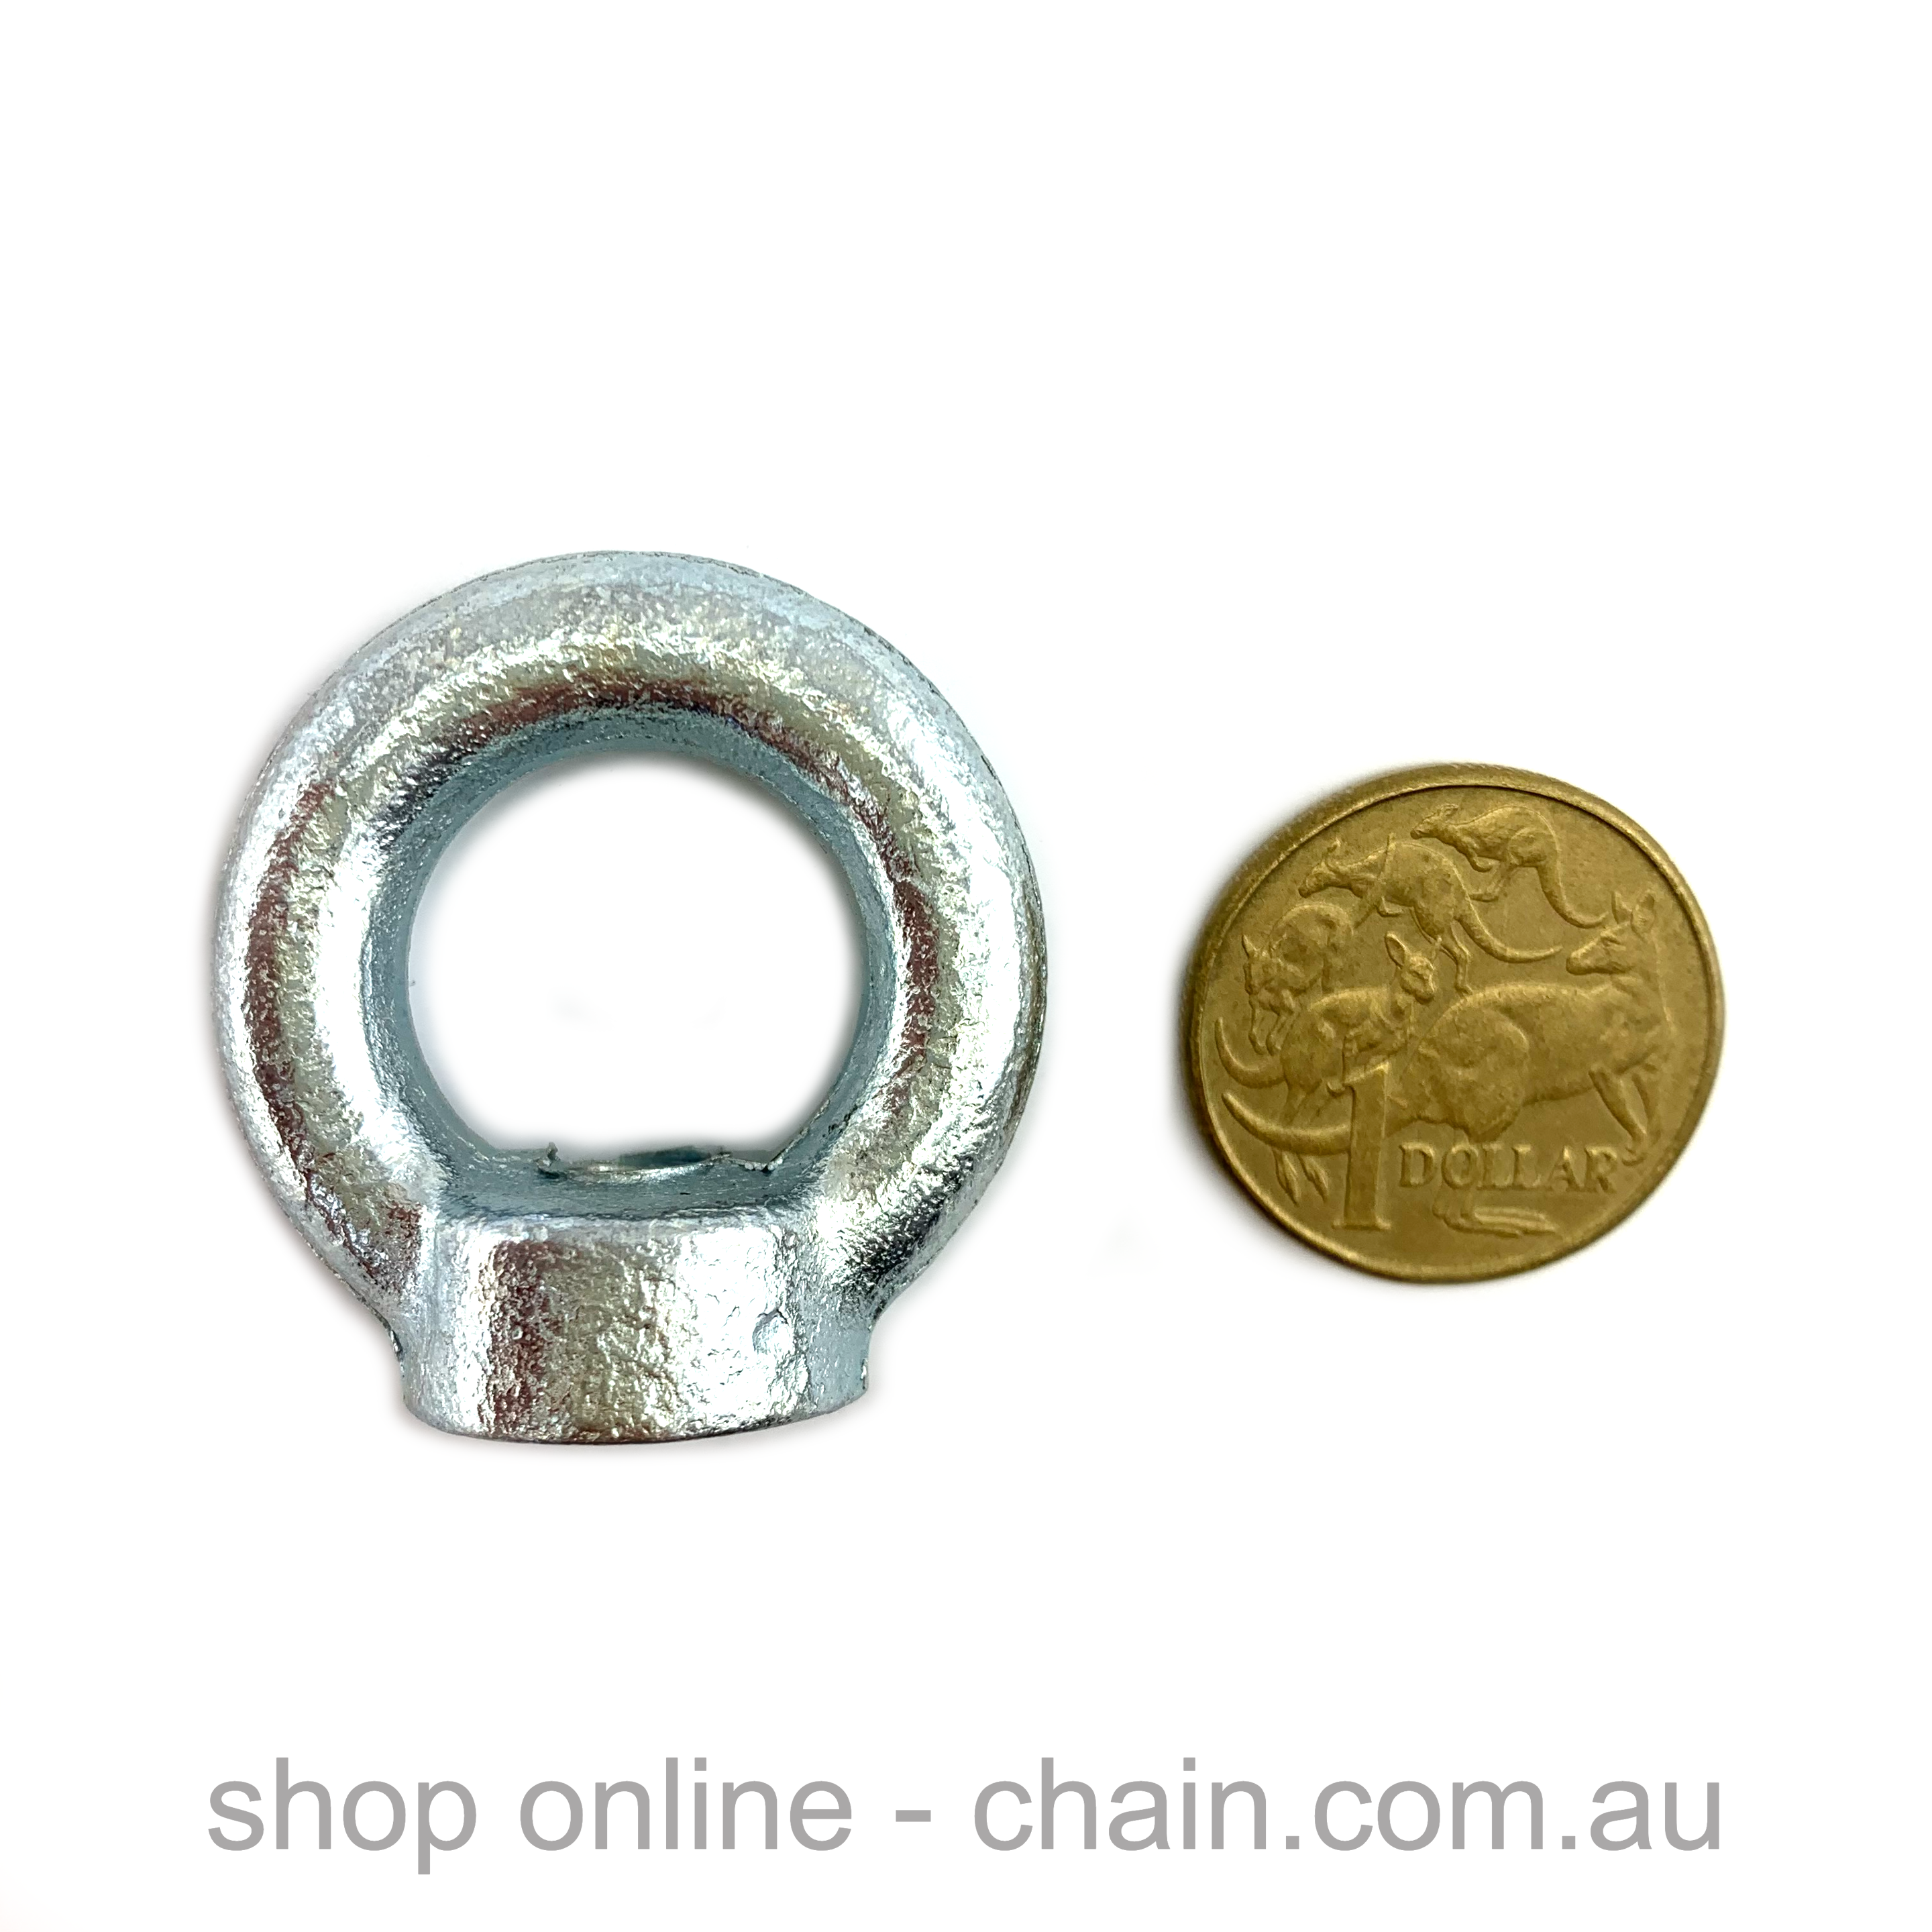 8mm Galvanised Lifting Nuts. Shop online chain.com.au